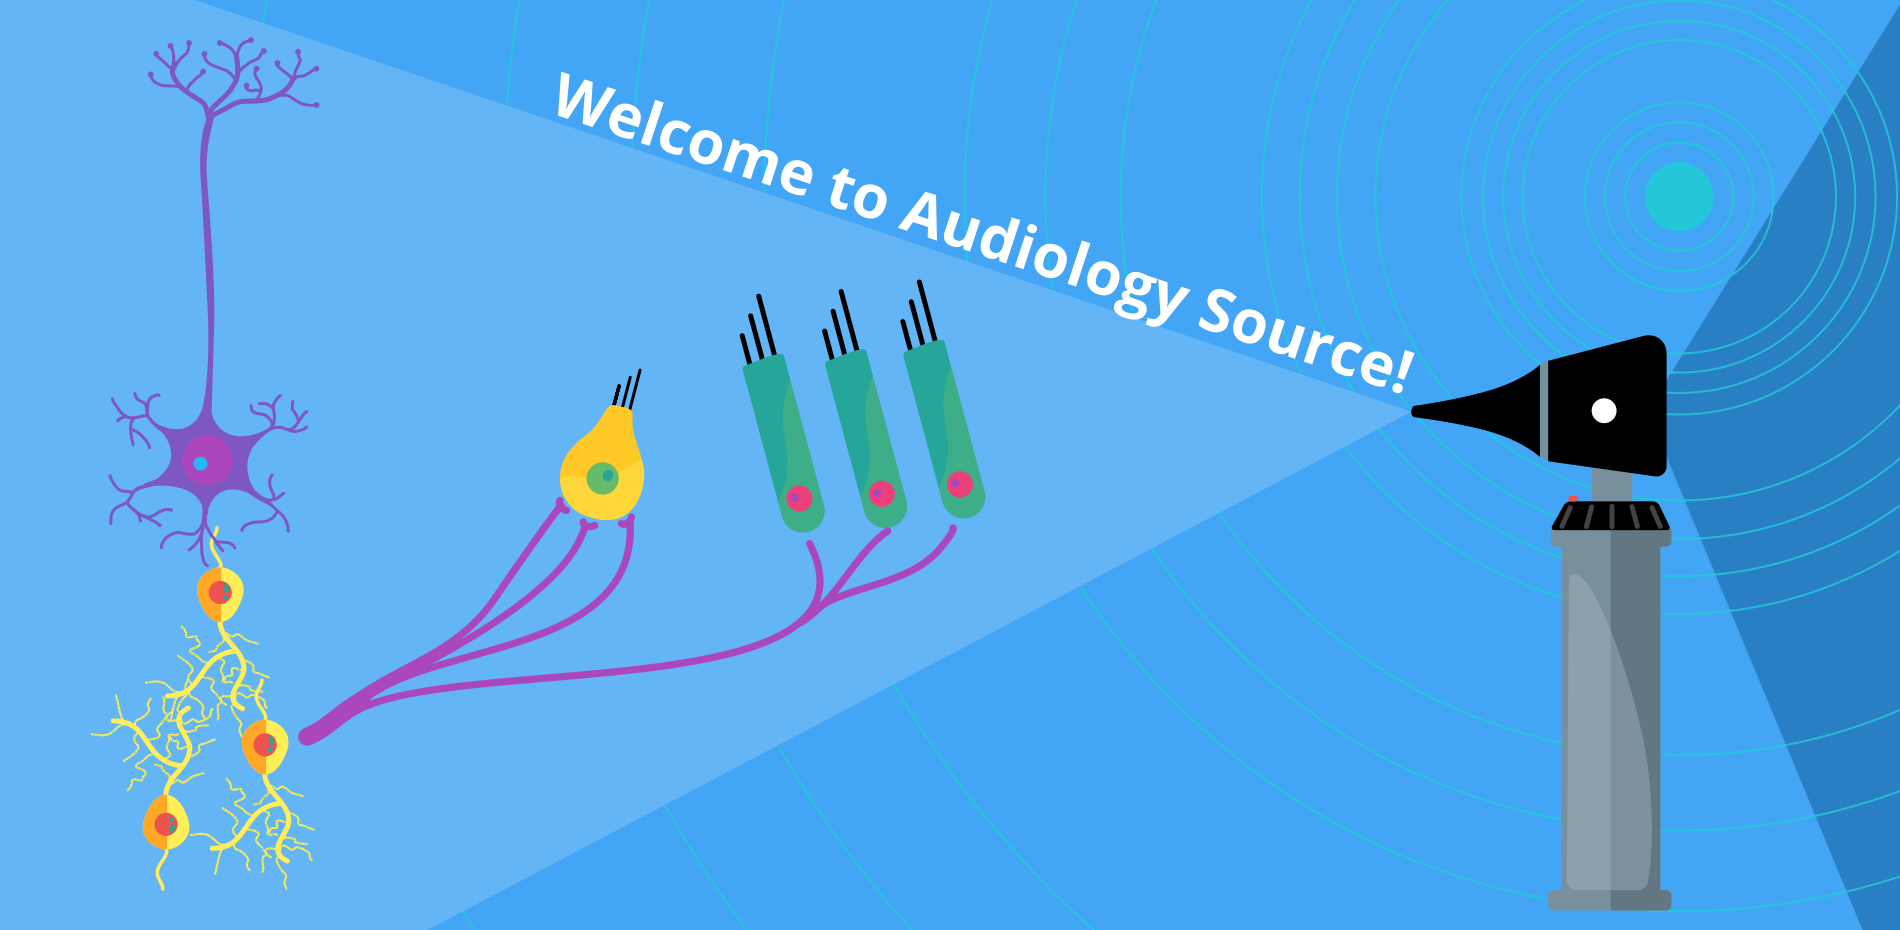 Audiology Source